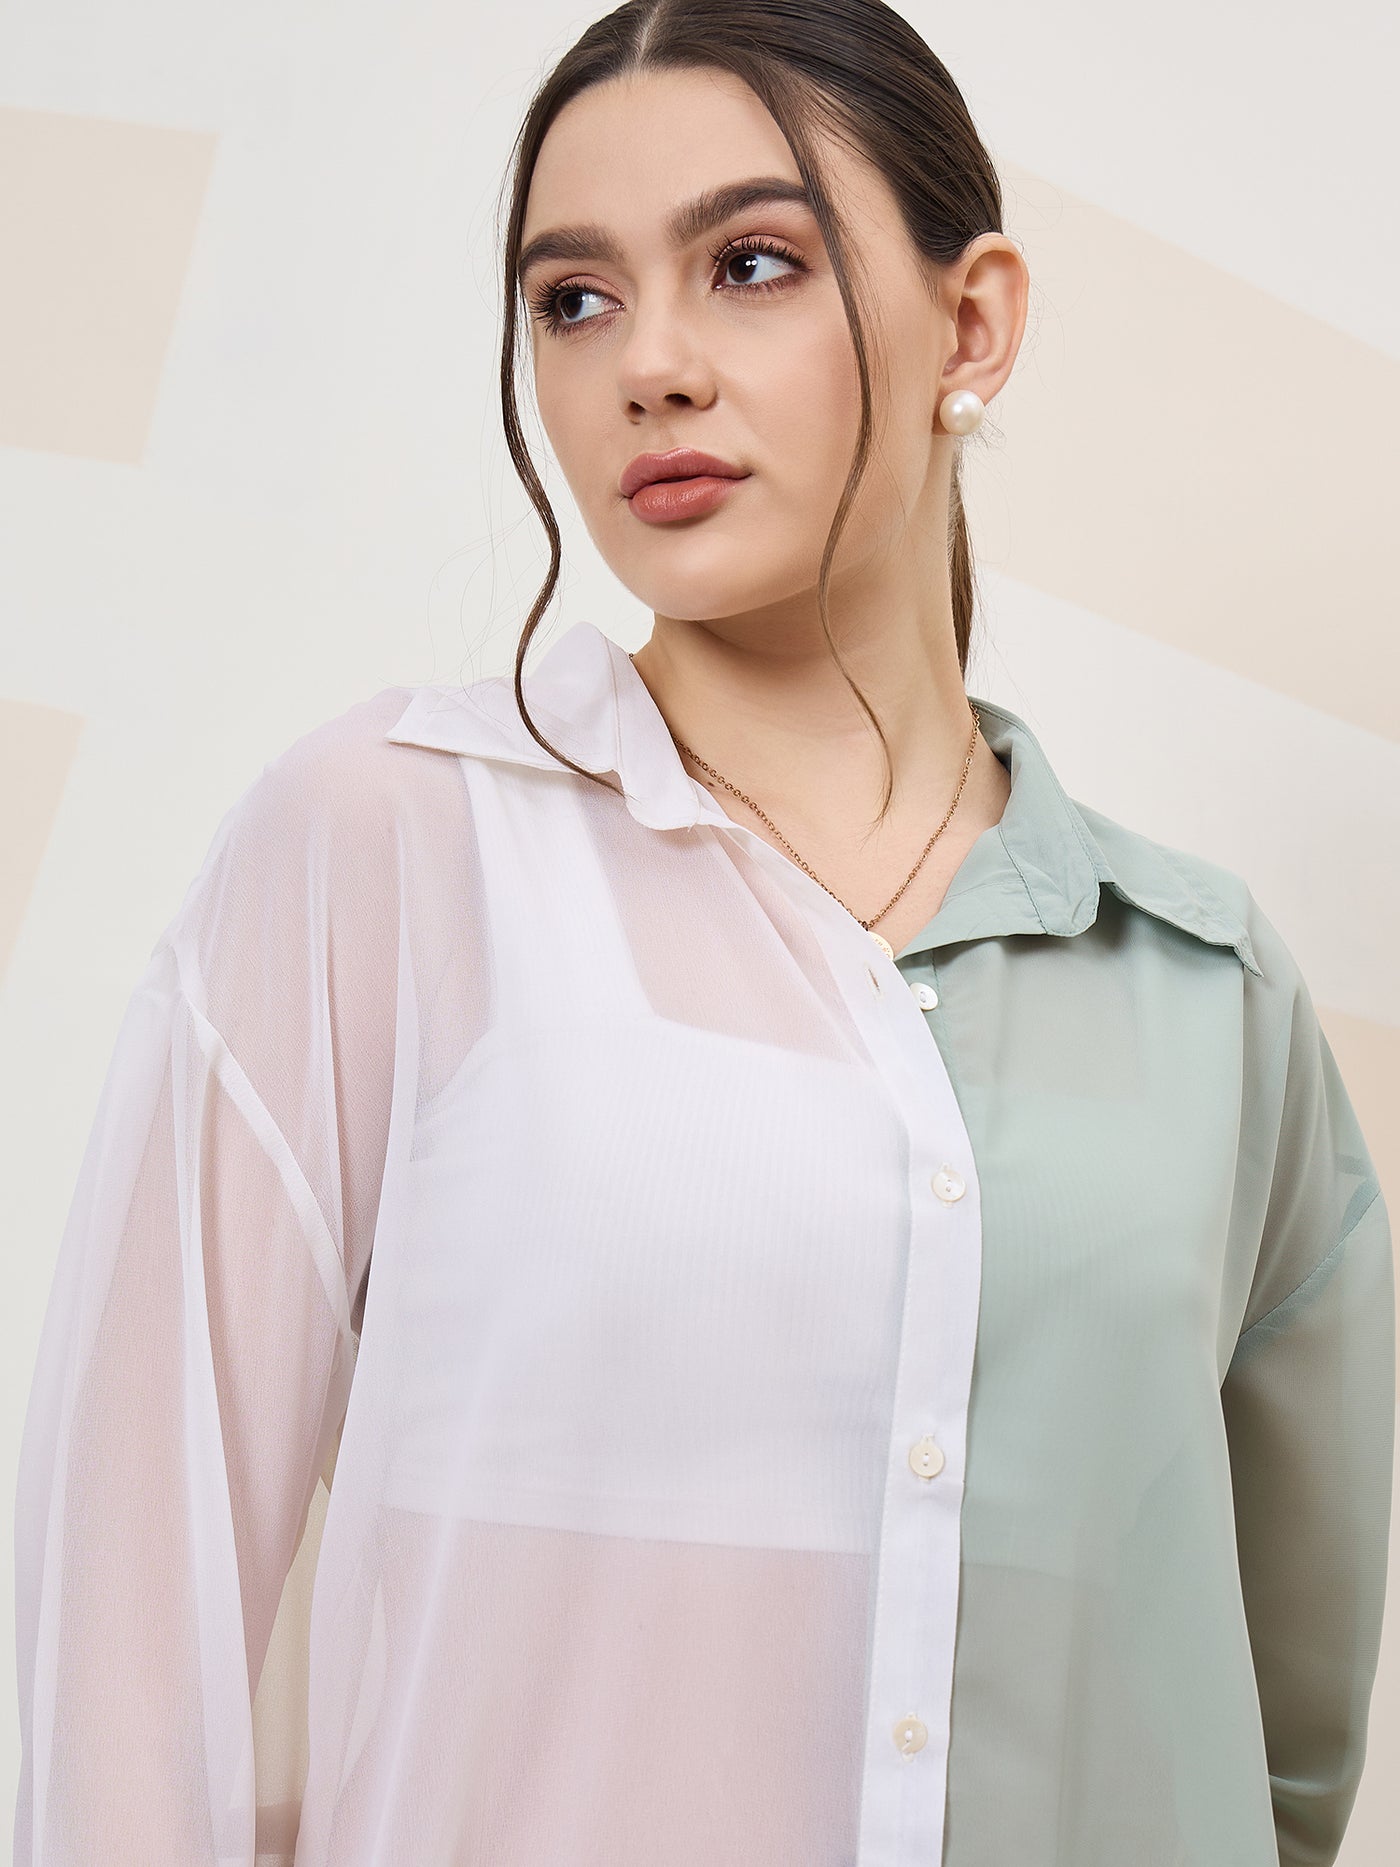 Athena Immutable Colour-blocked Drop-Shoulder Sleeves Casual Shirt